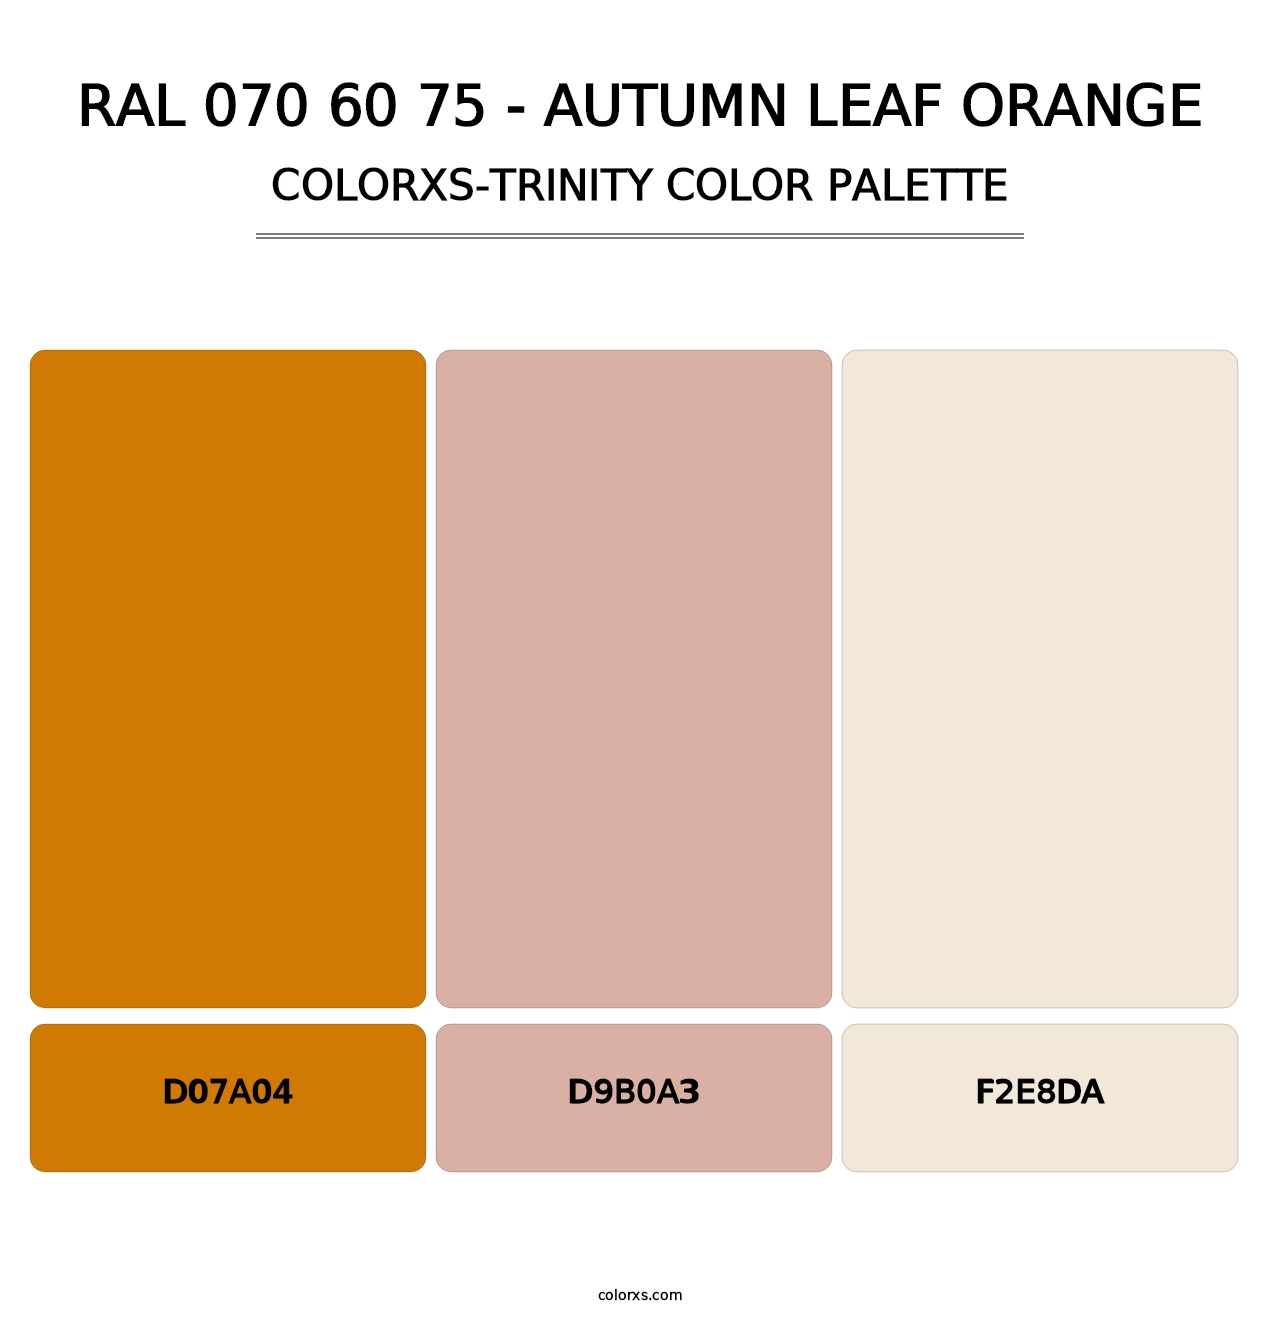 RAL 070 60 75 - Autumn Leaf Orange - Colorxs Trinity Palette